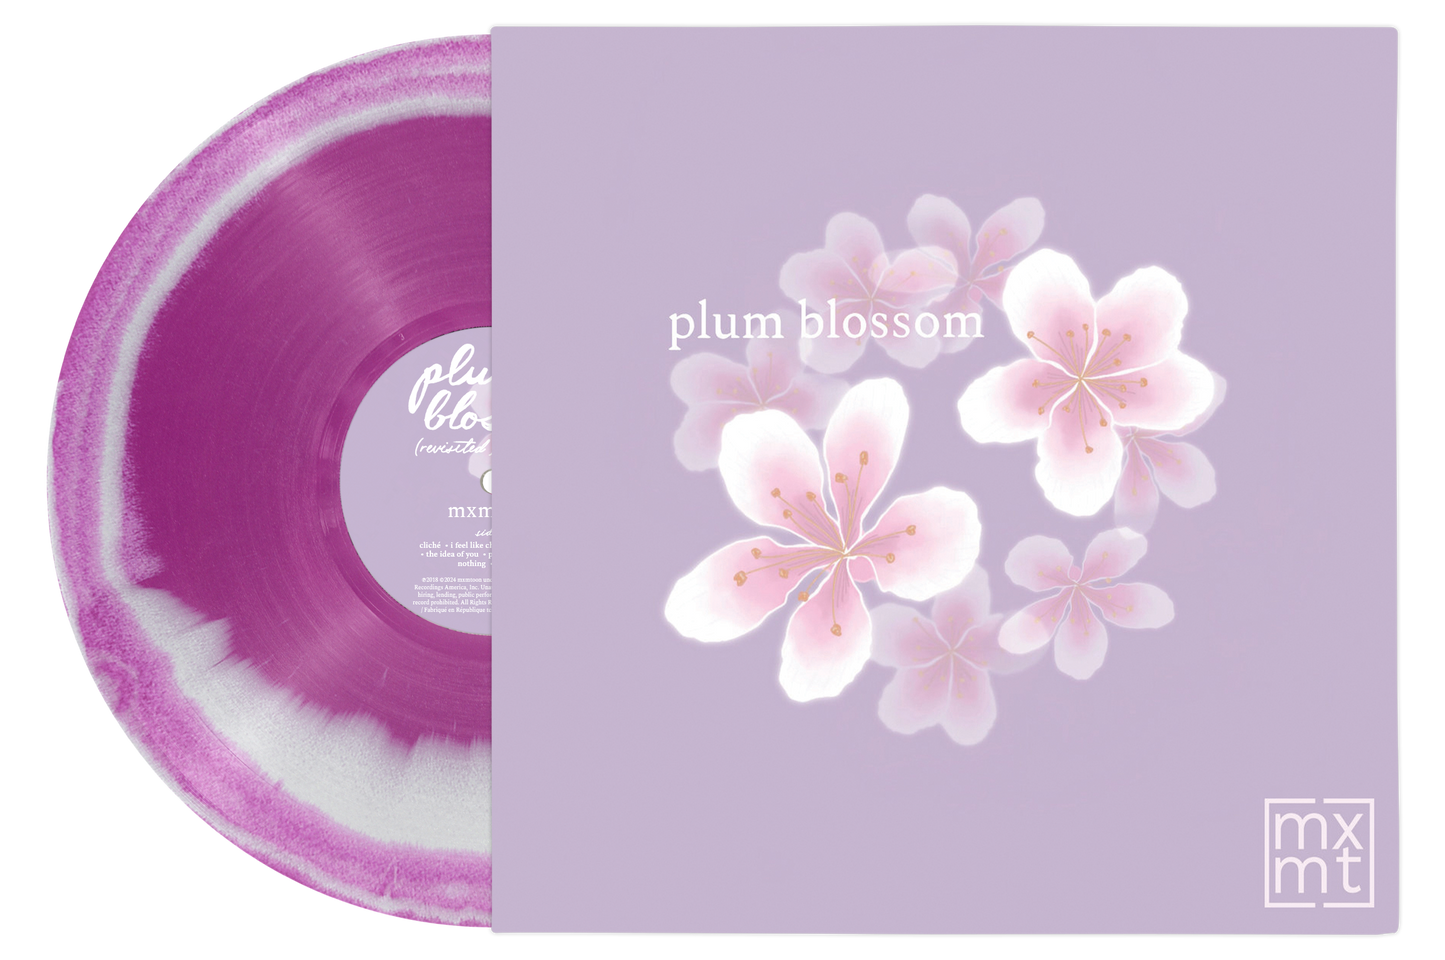 plum blossom - limited edition vinyl